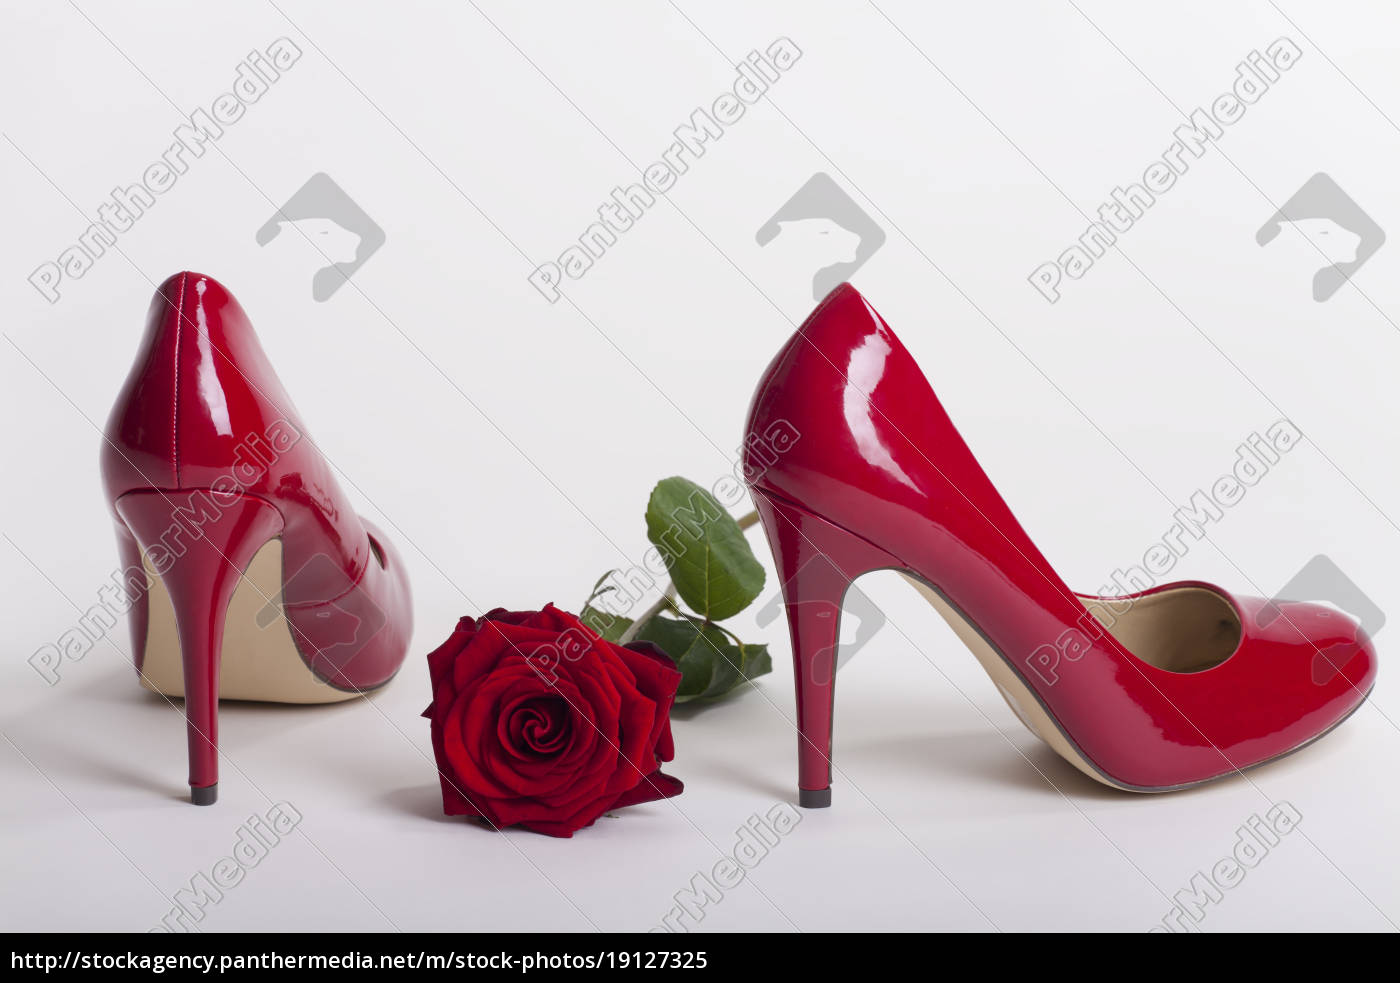 white colour heels